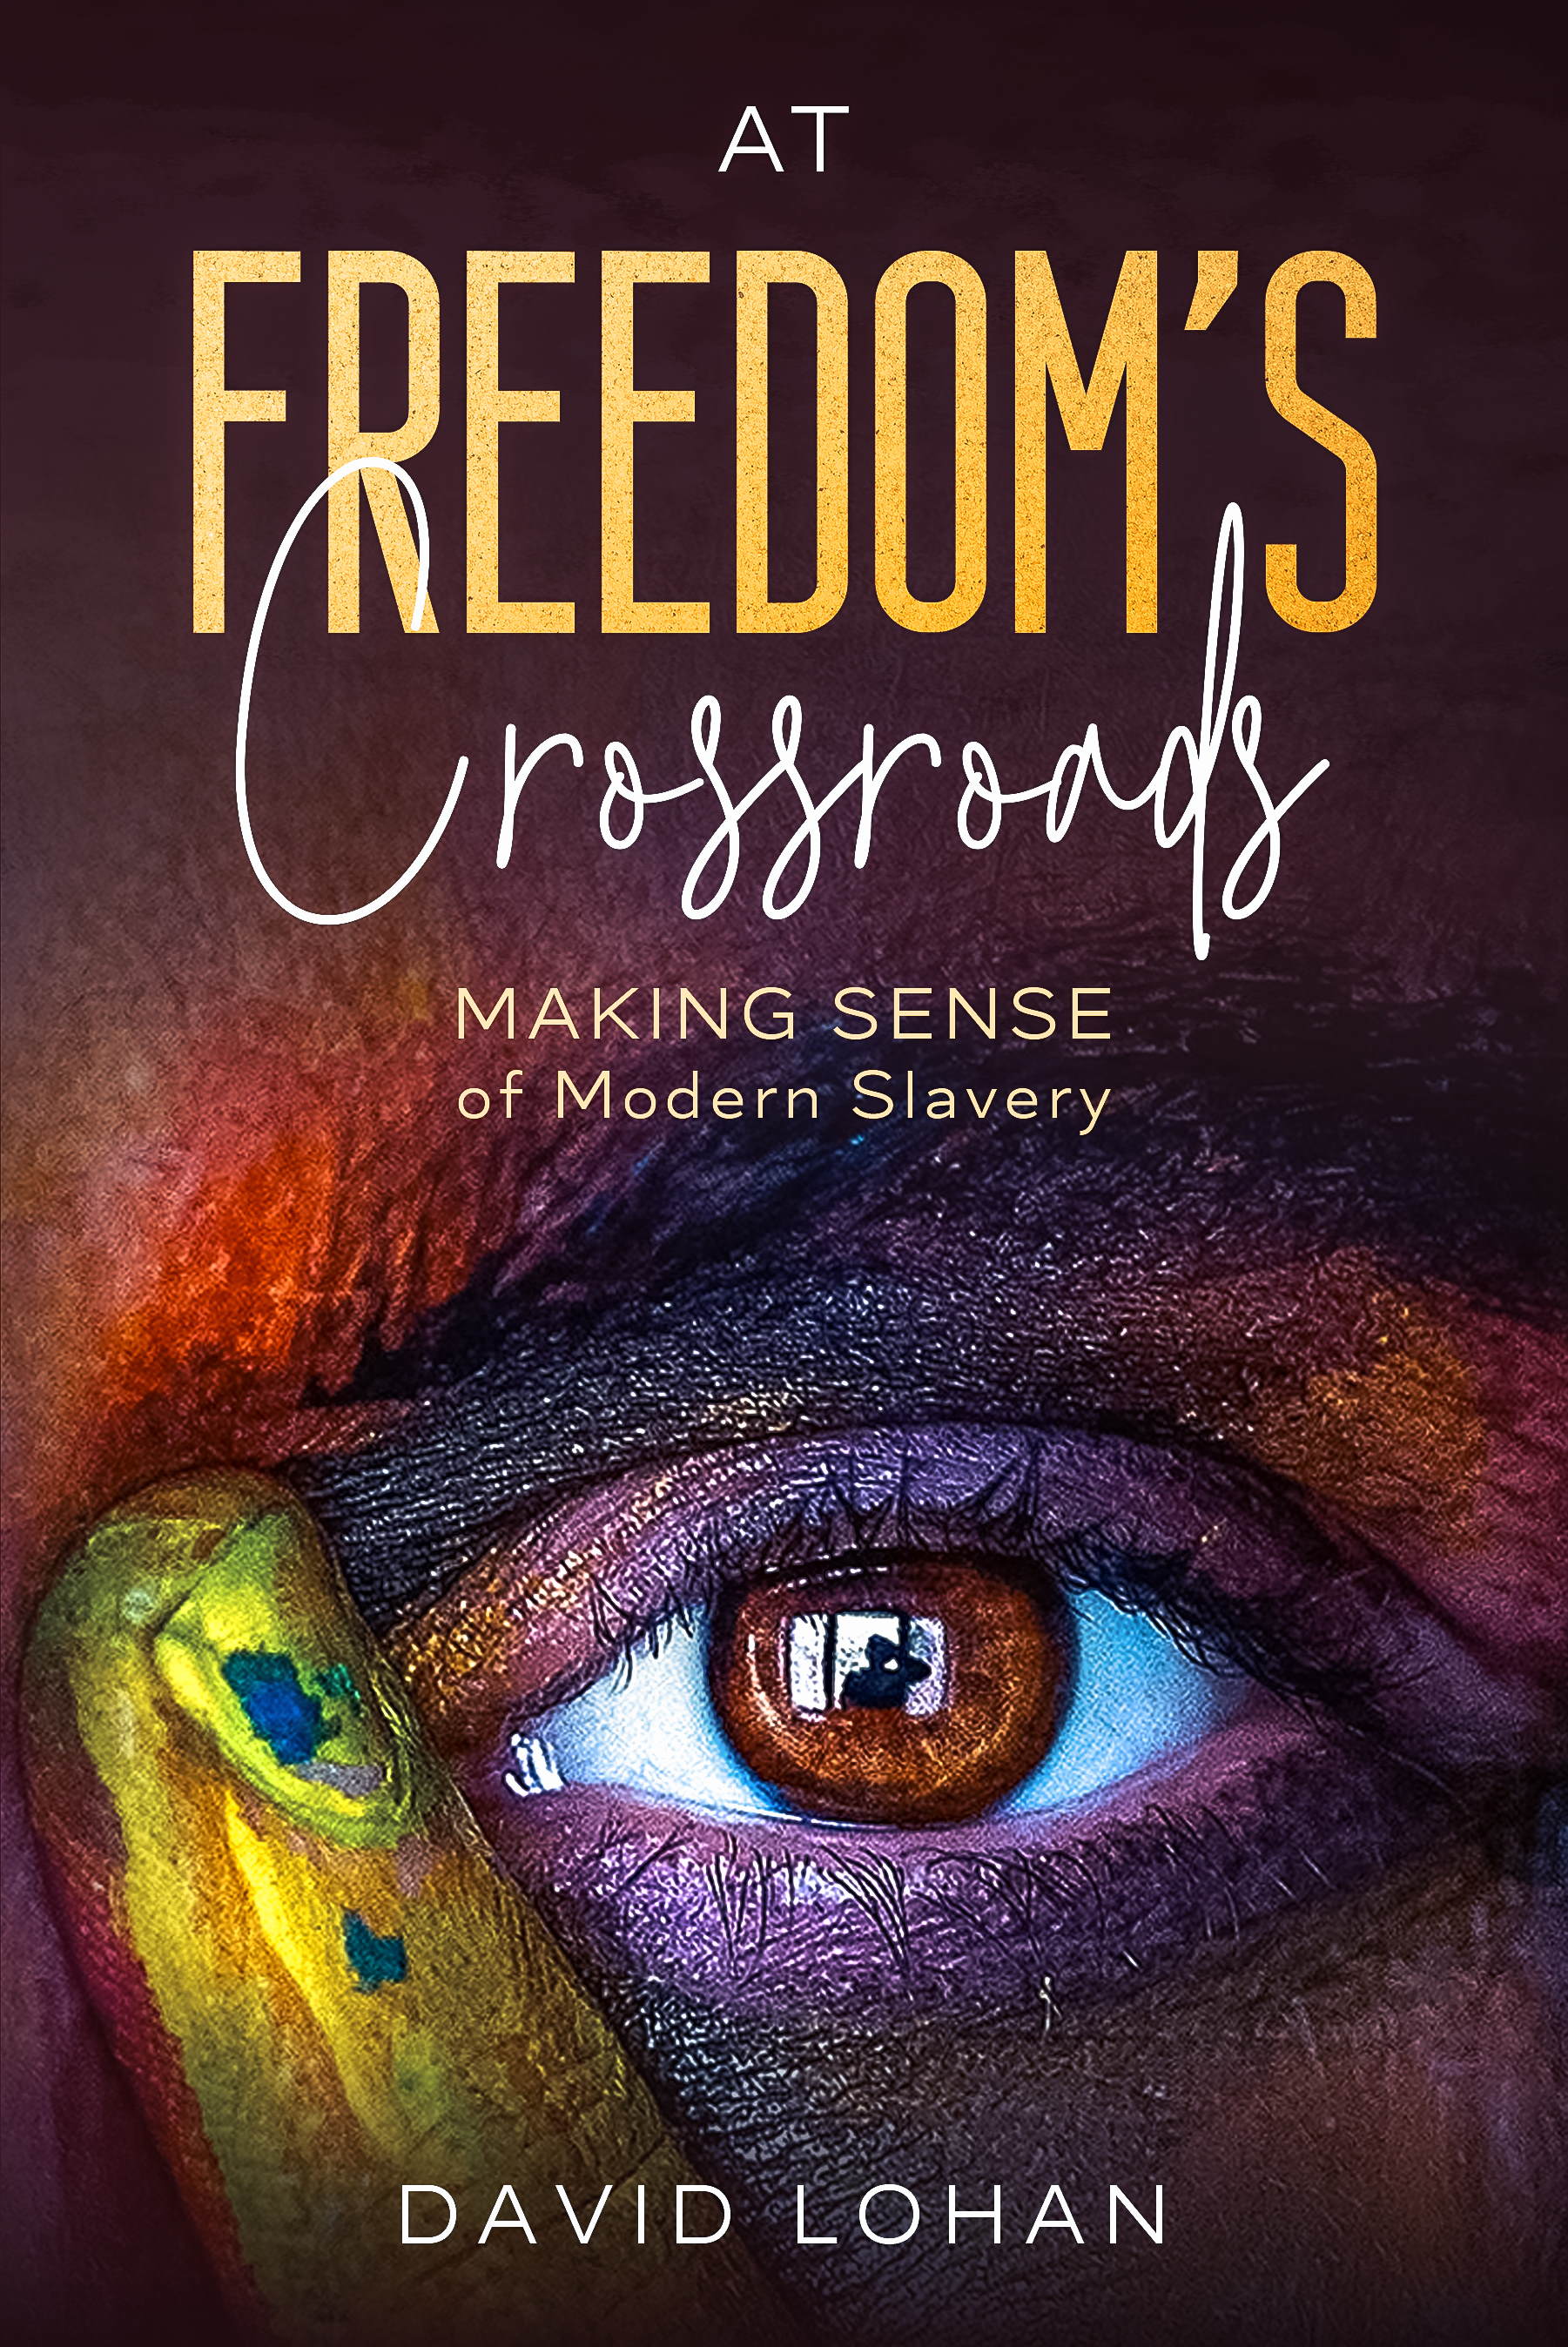 At Freedom's Crossroads: Making Sense of Modern Slavery